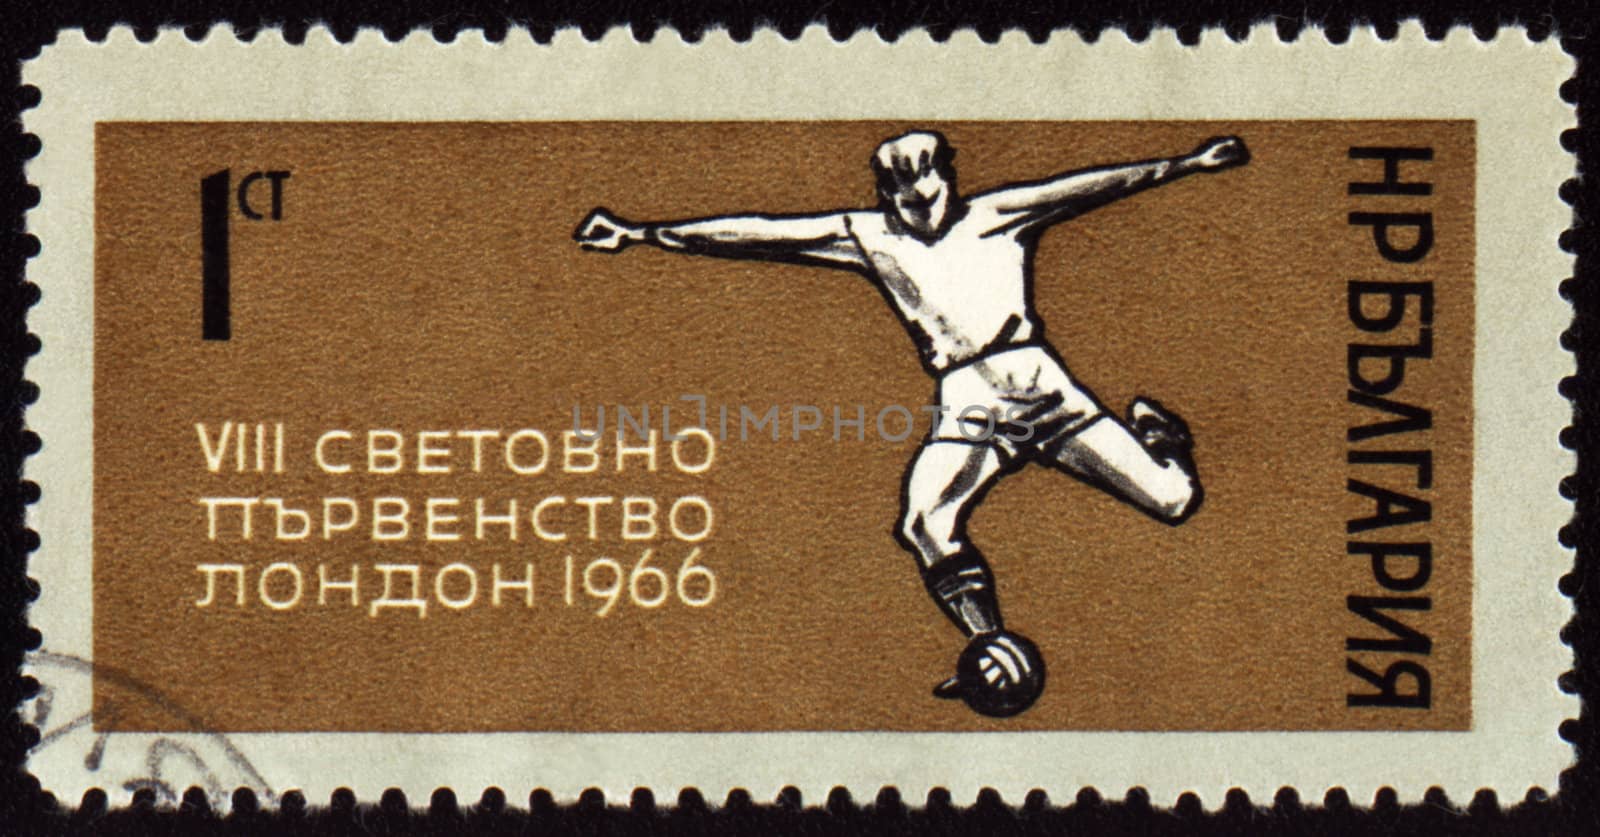 BULGARIA - CIRCA 1966: A stamp printed in Bulgaria shows World Football Championship in London, circa 1966